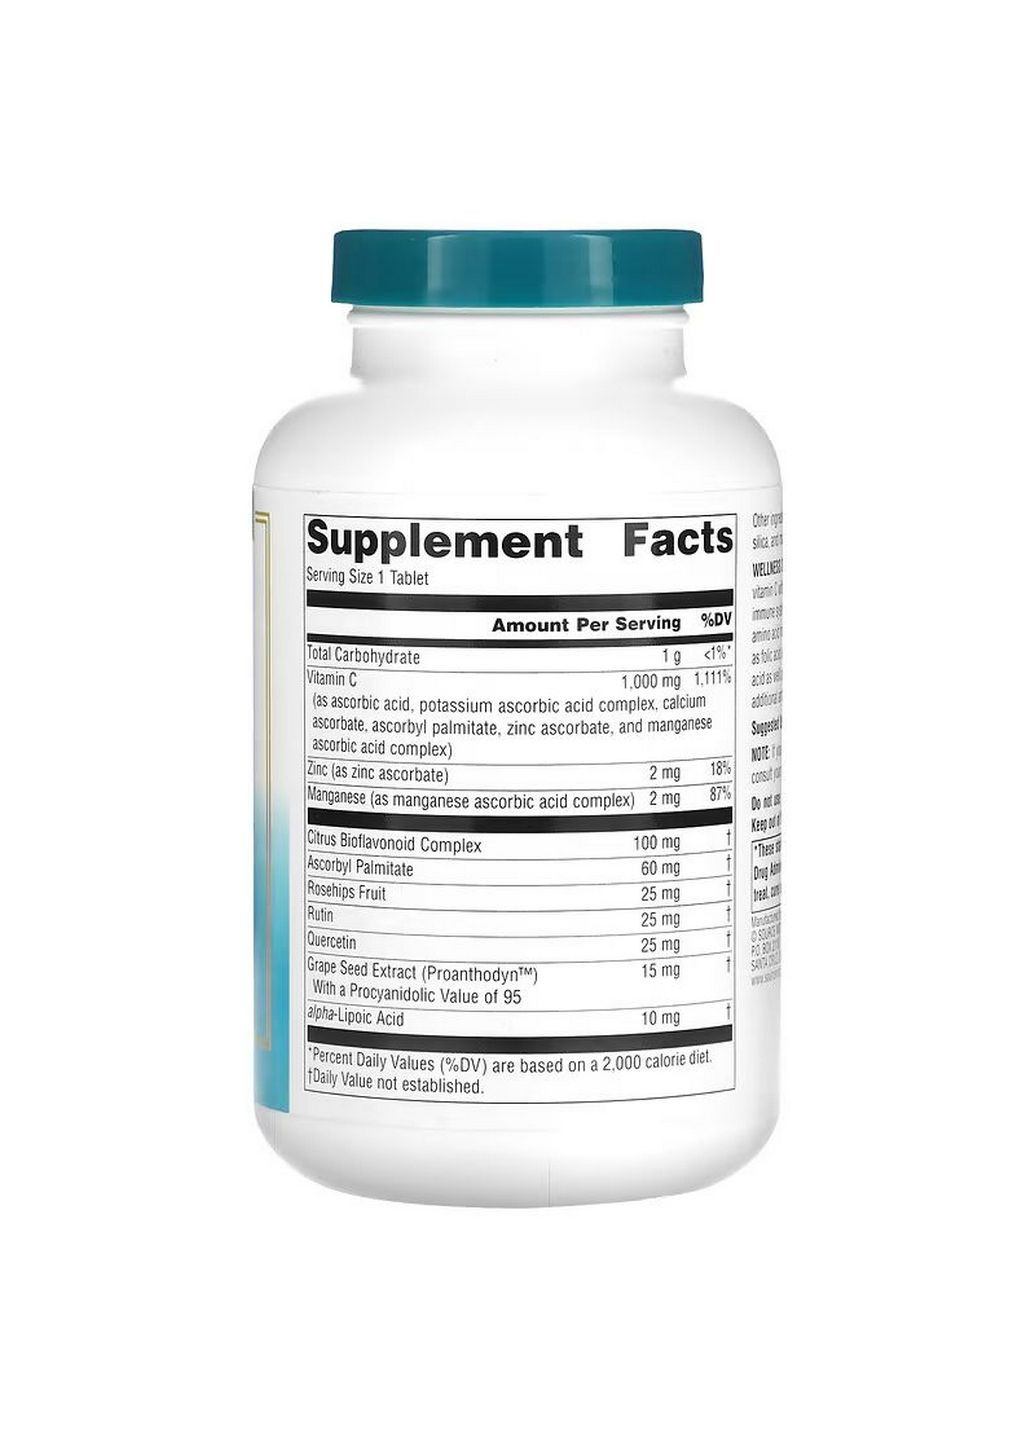 Витамины и минералы Wellness Vitamin C-1000, 100 таблеток Source Naturals (293341993)